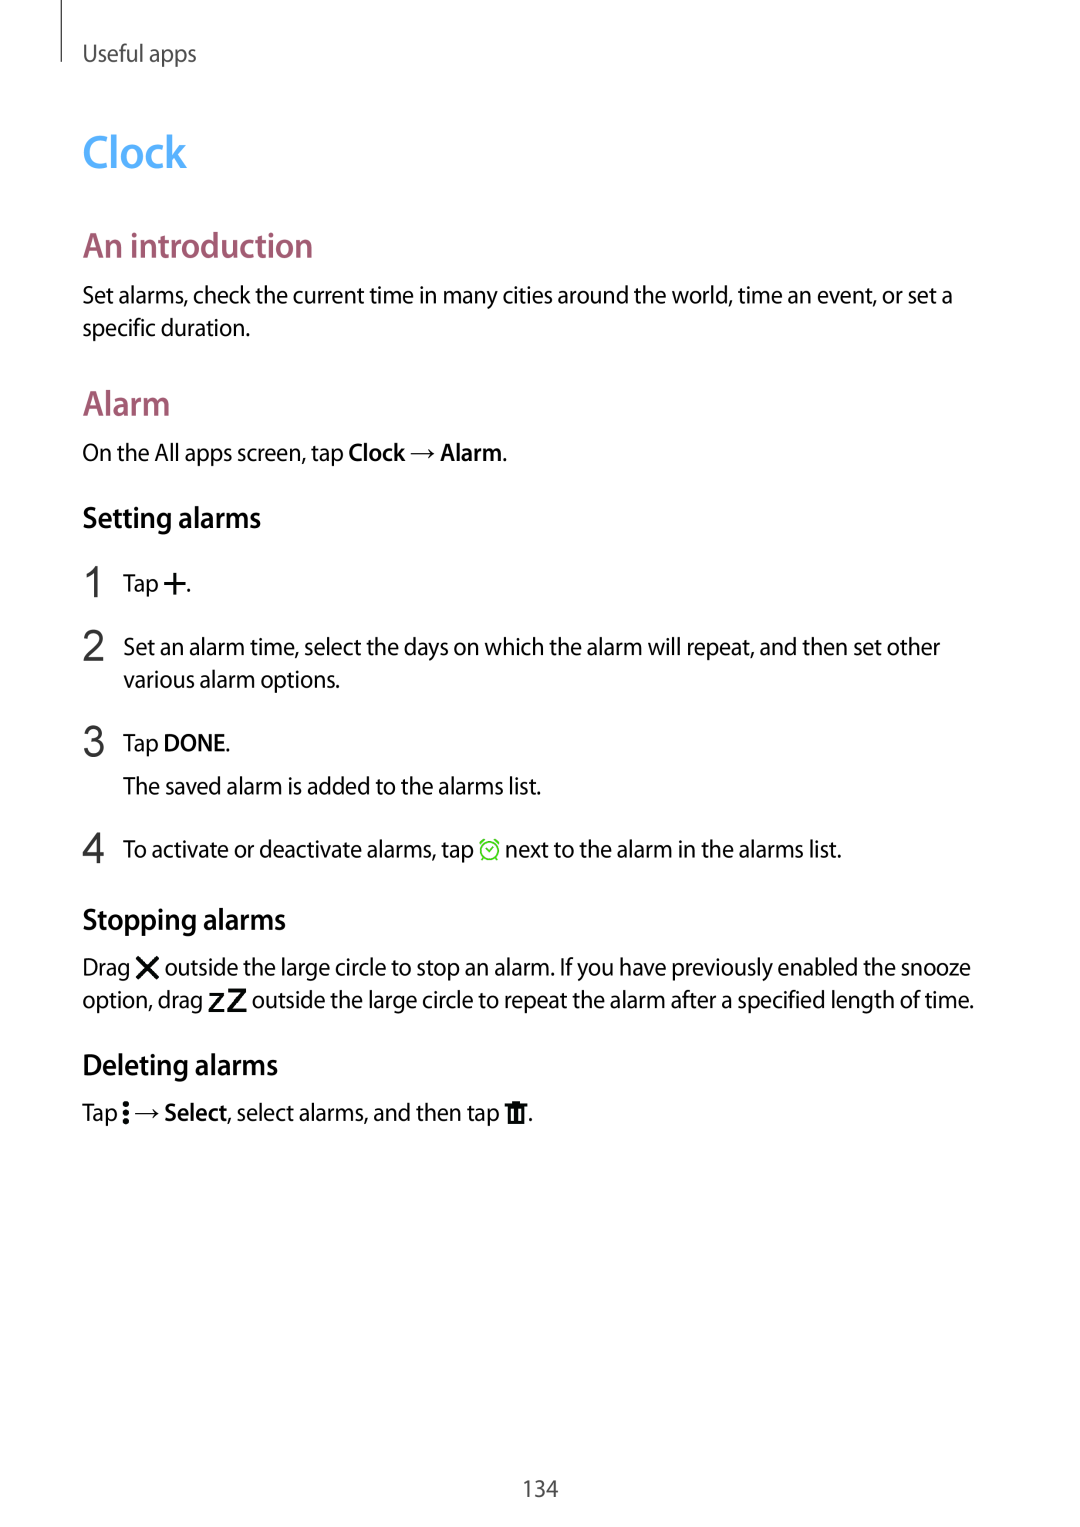 Samsung SM-N915FZKYXEF manual Clock, Alarm, Setting alarms, Stopping alarms, Deleting alarms, An introduction, Useful apps 